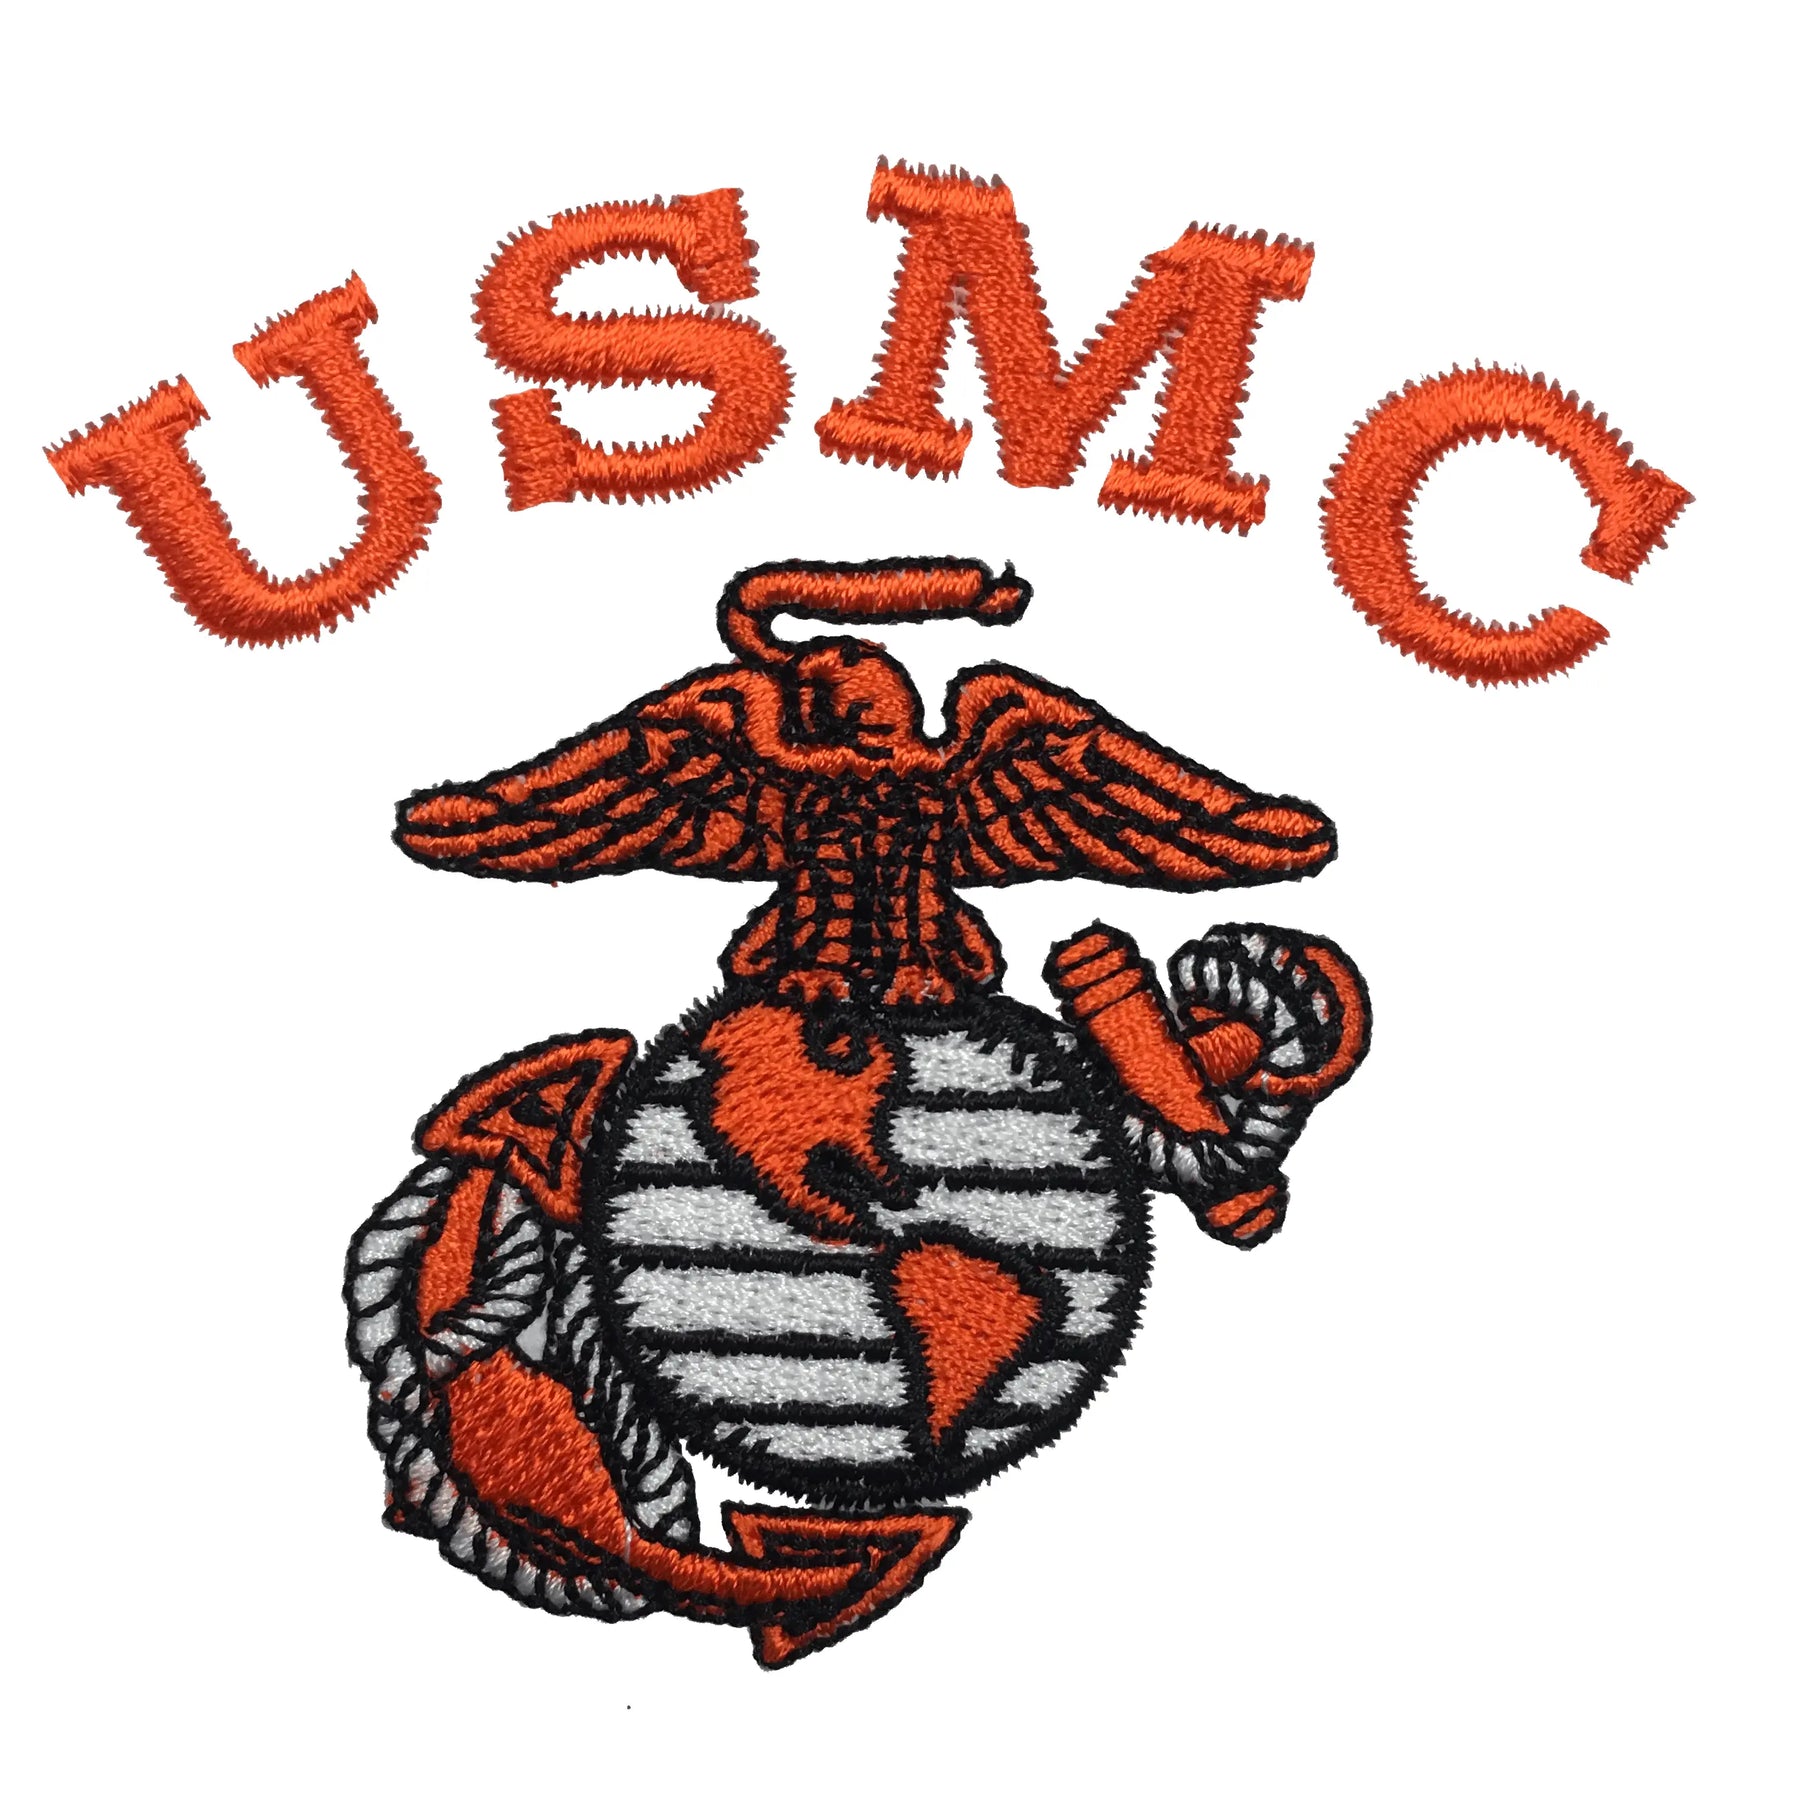 High Velocity Orange USMC Embroidered Black Sweatshirt - Marine Corps Direct